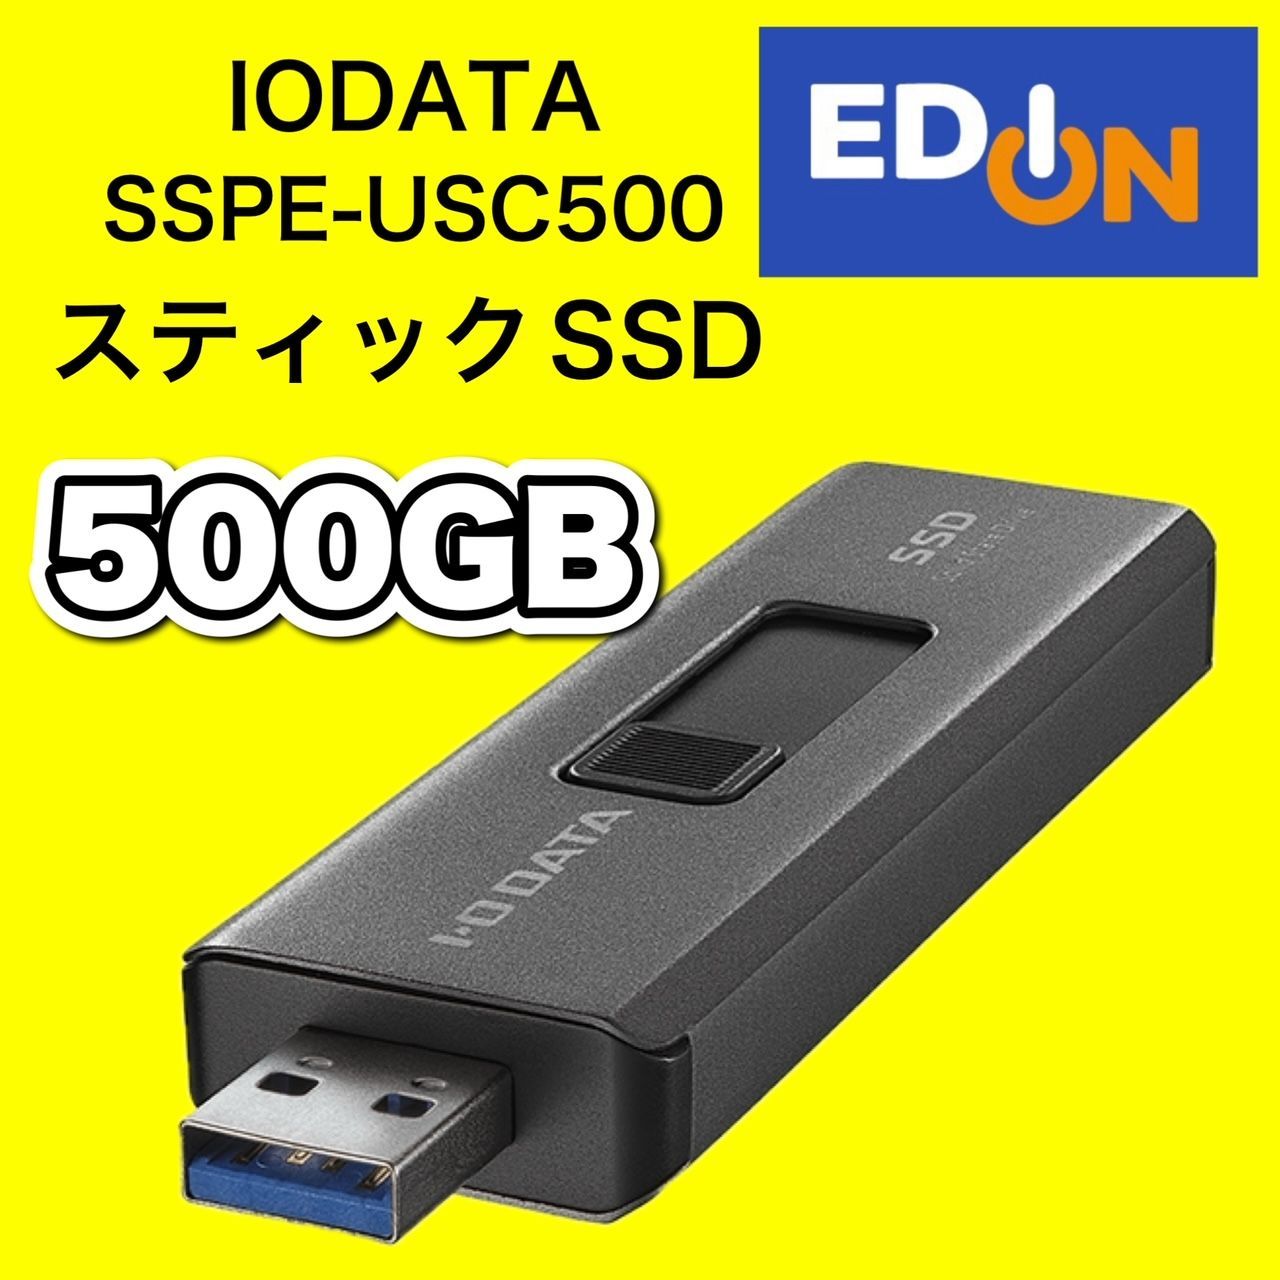 04191】IODATA SSPE-USC500 USB-A＆USB-C®コネクター搭載 スティックSSD500GB - メルカリ